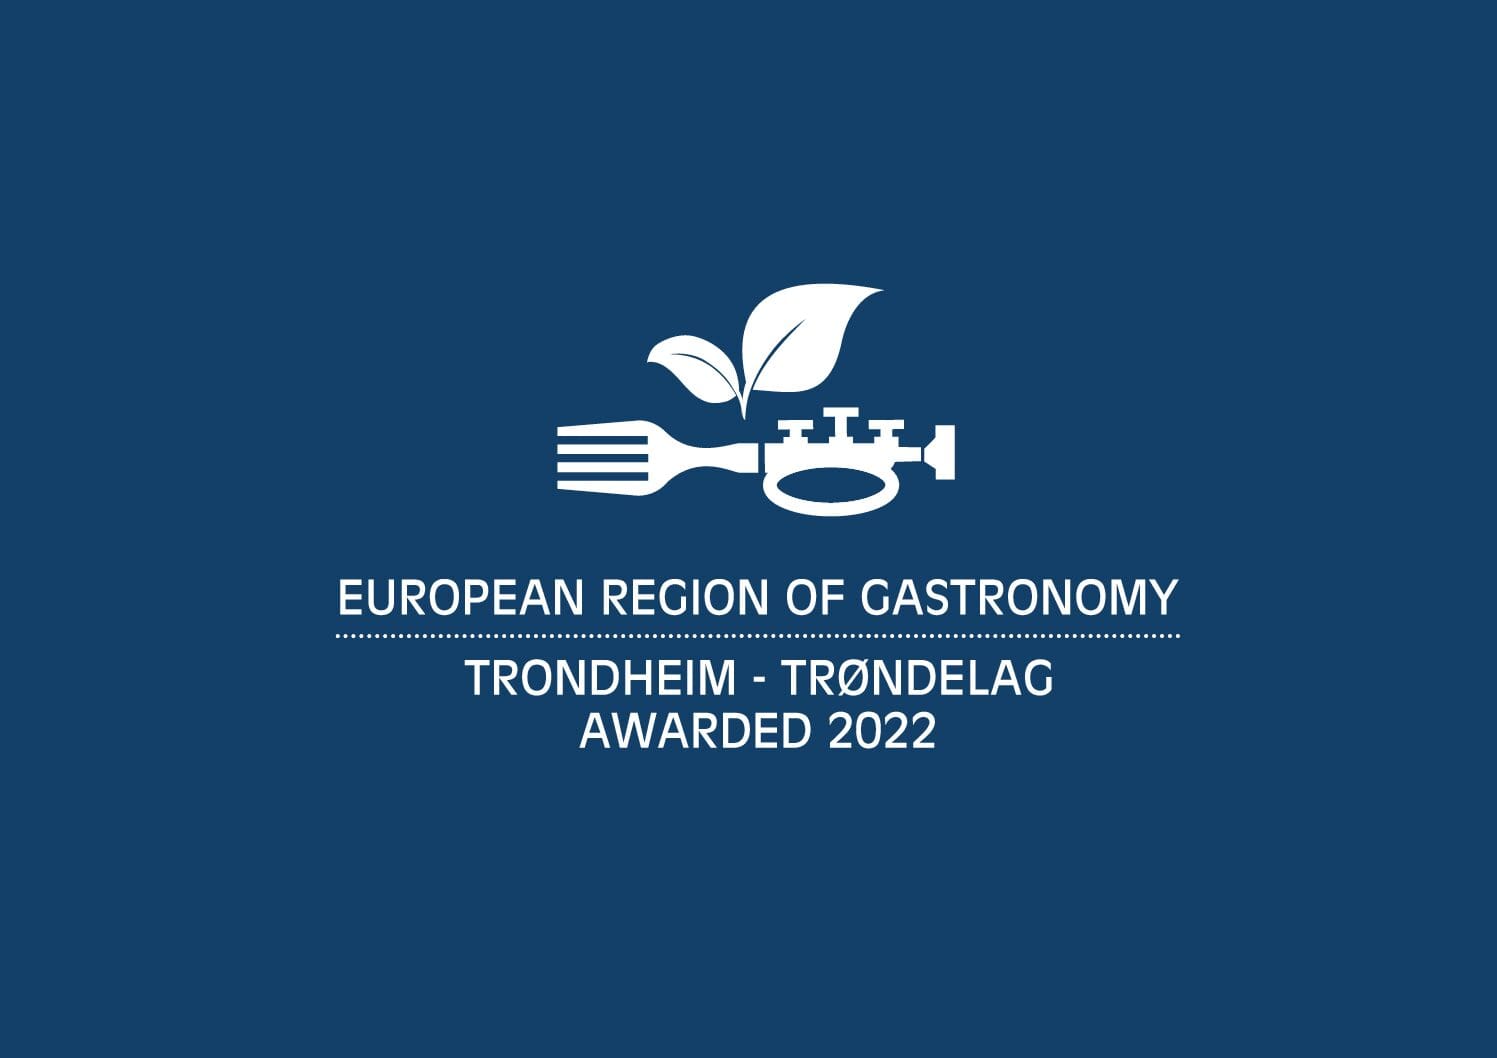 European Region of Gastronomy 2022